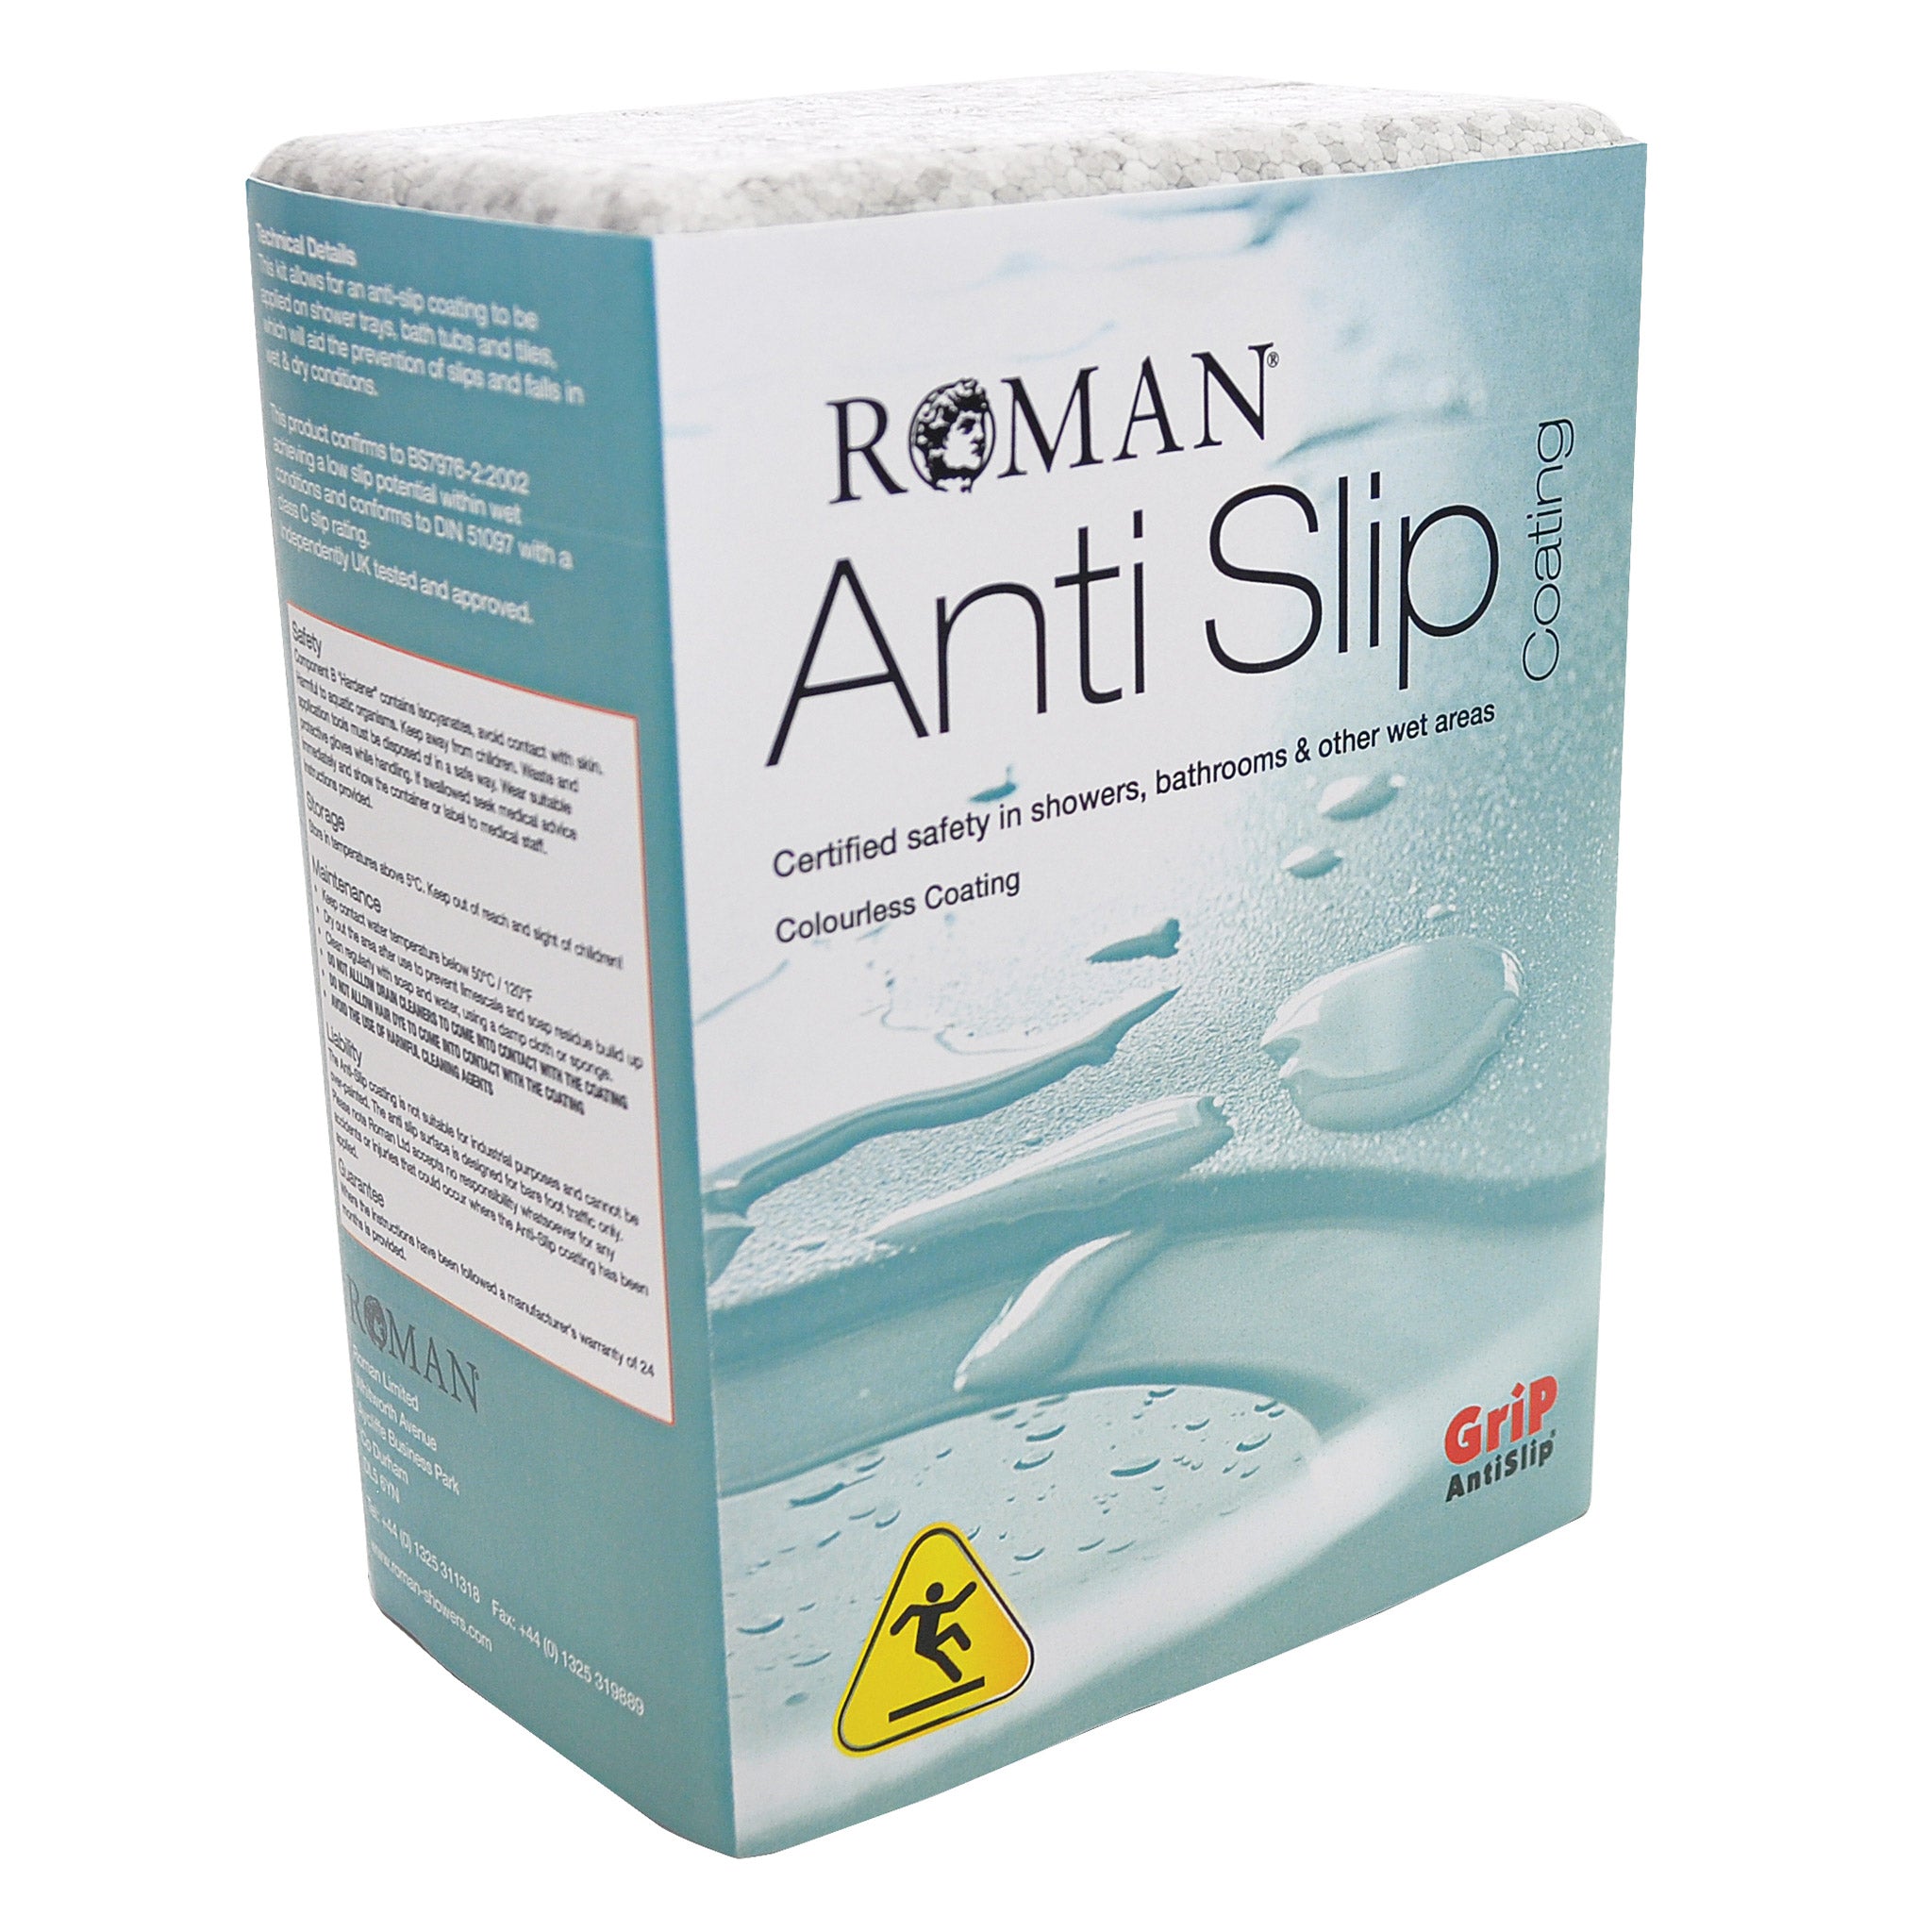 Roman Anti Slip Coating Pack